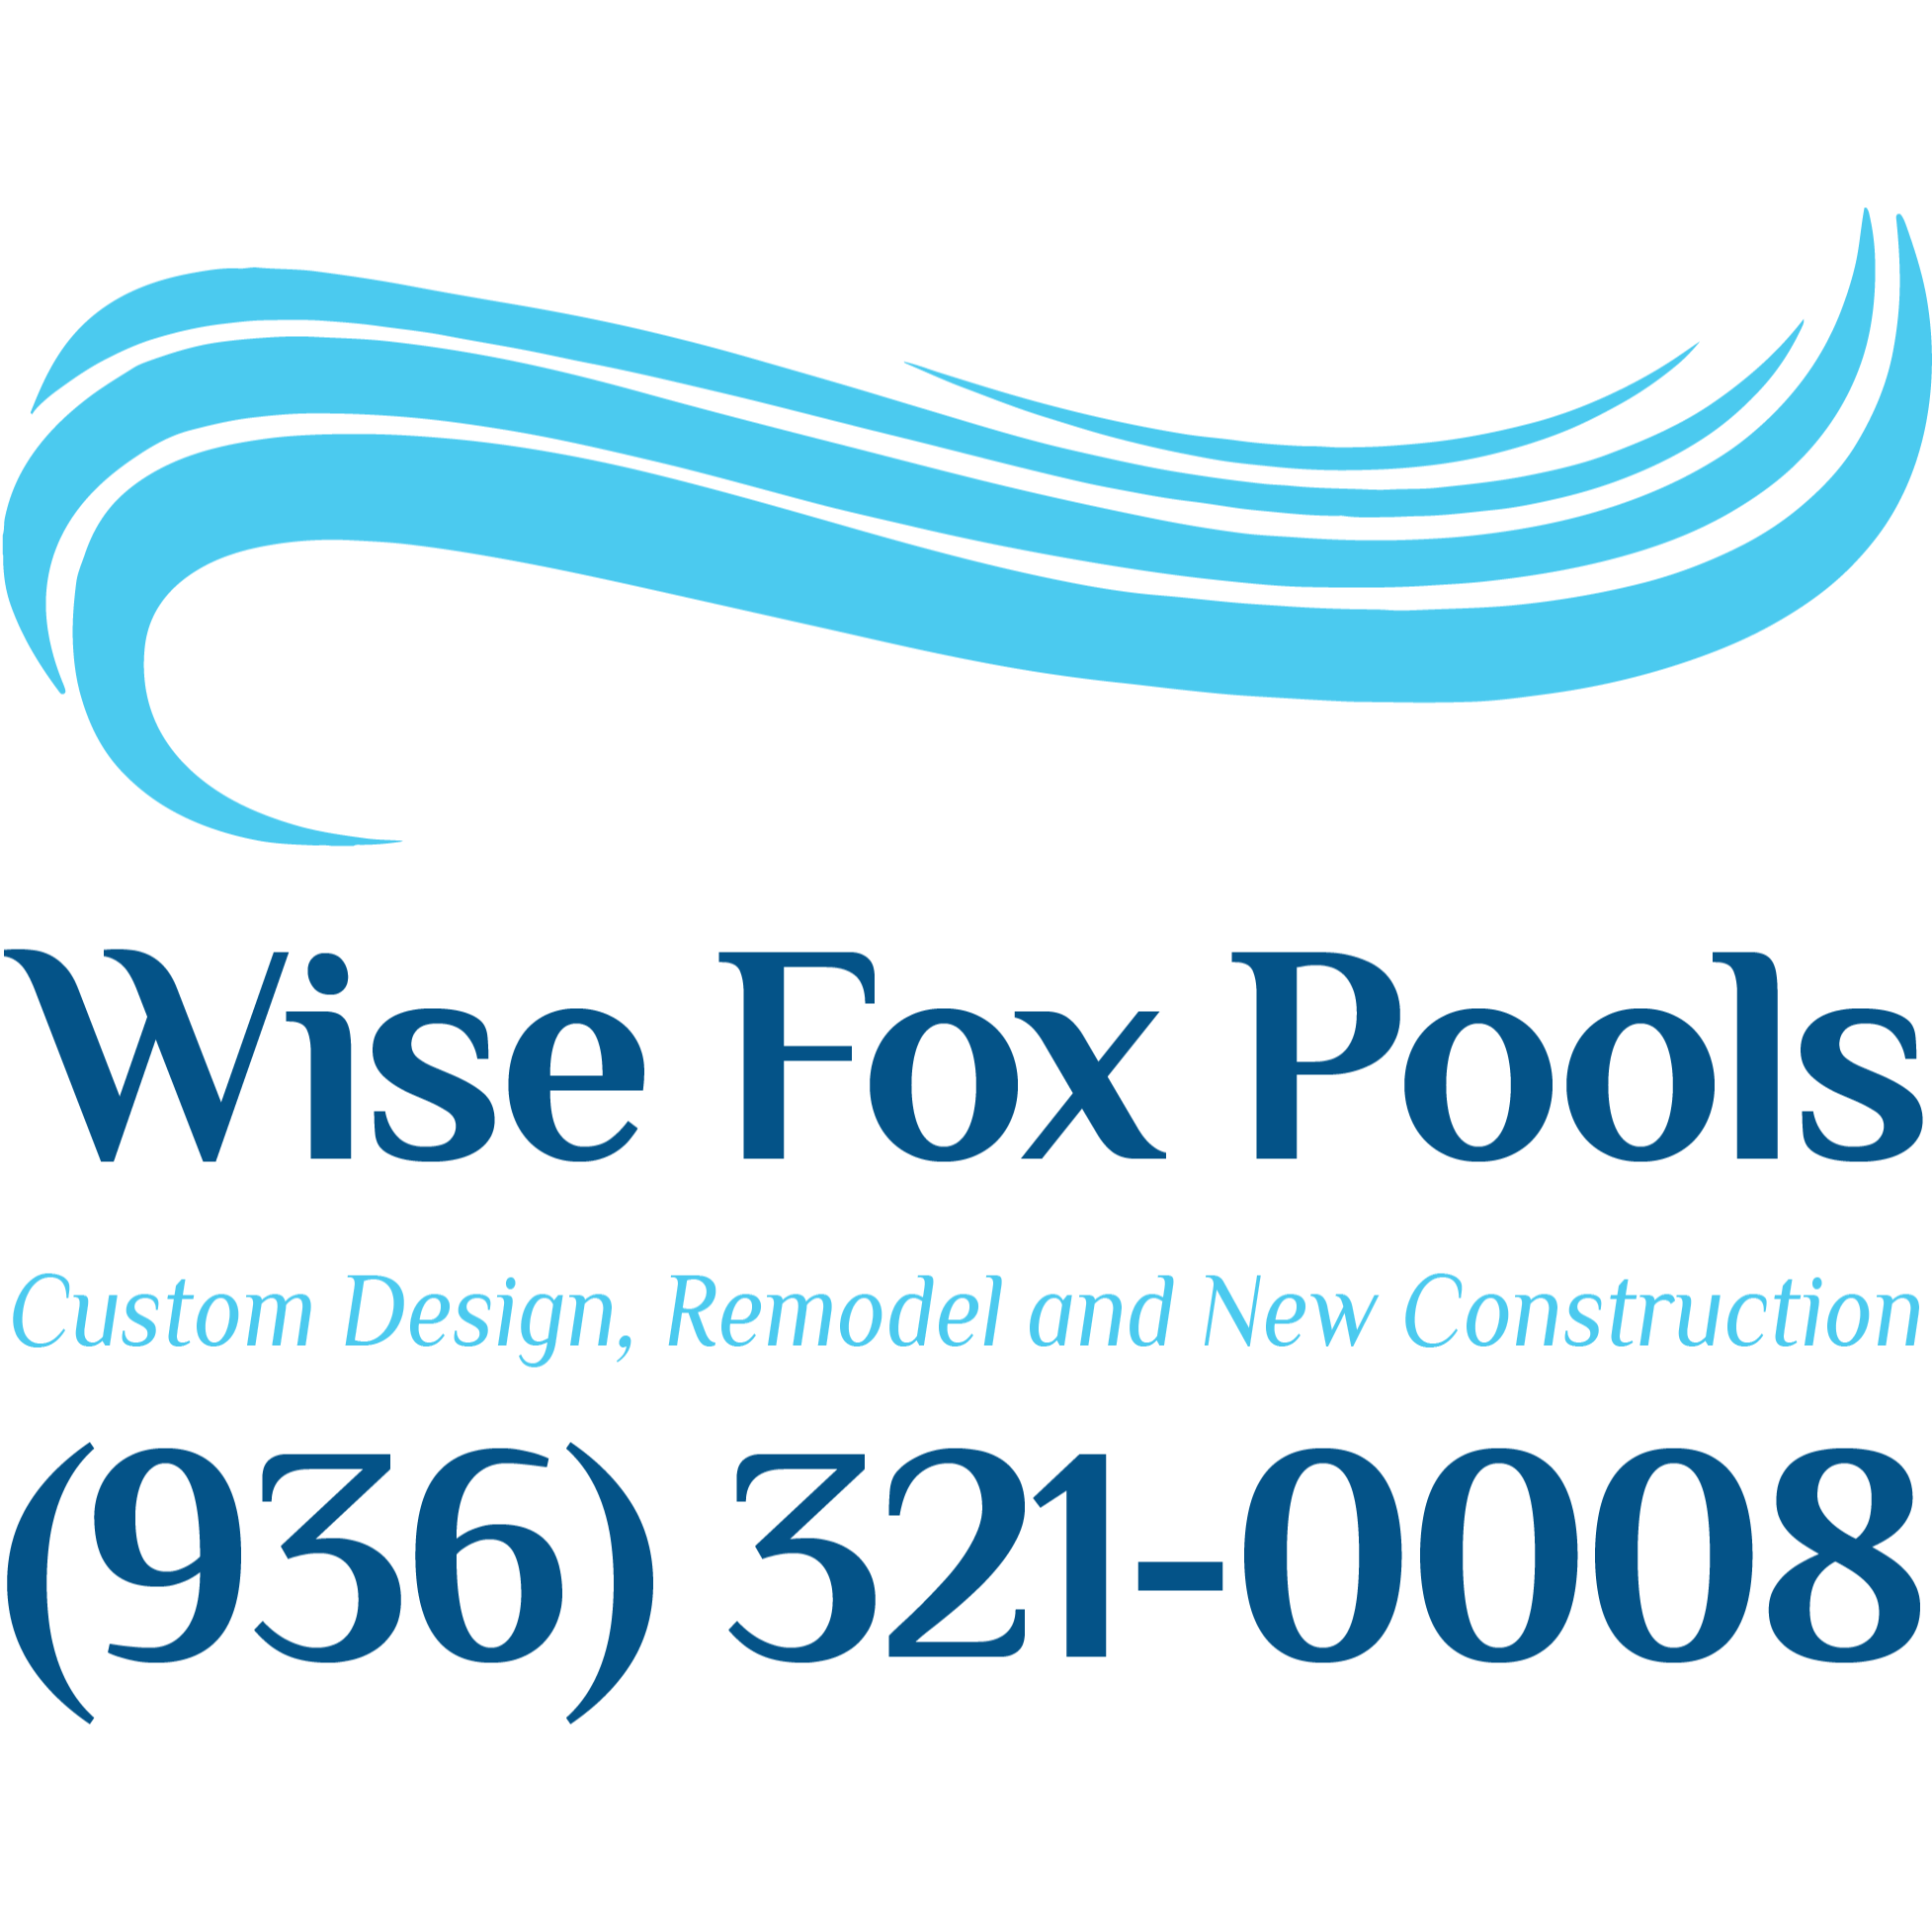 Wise Fox Pools